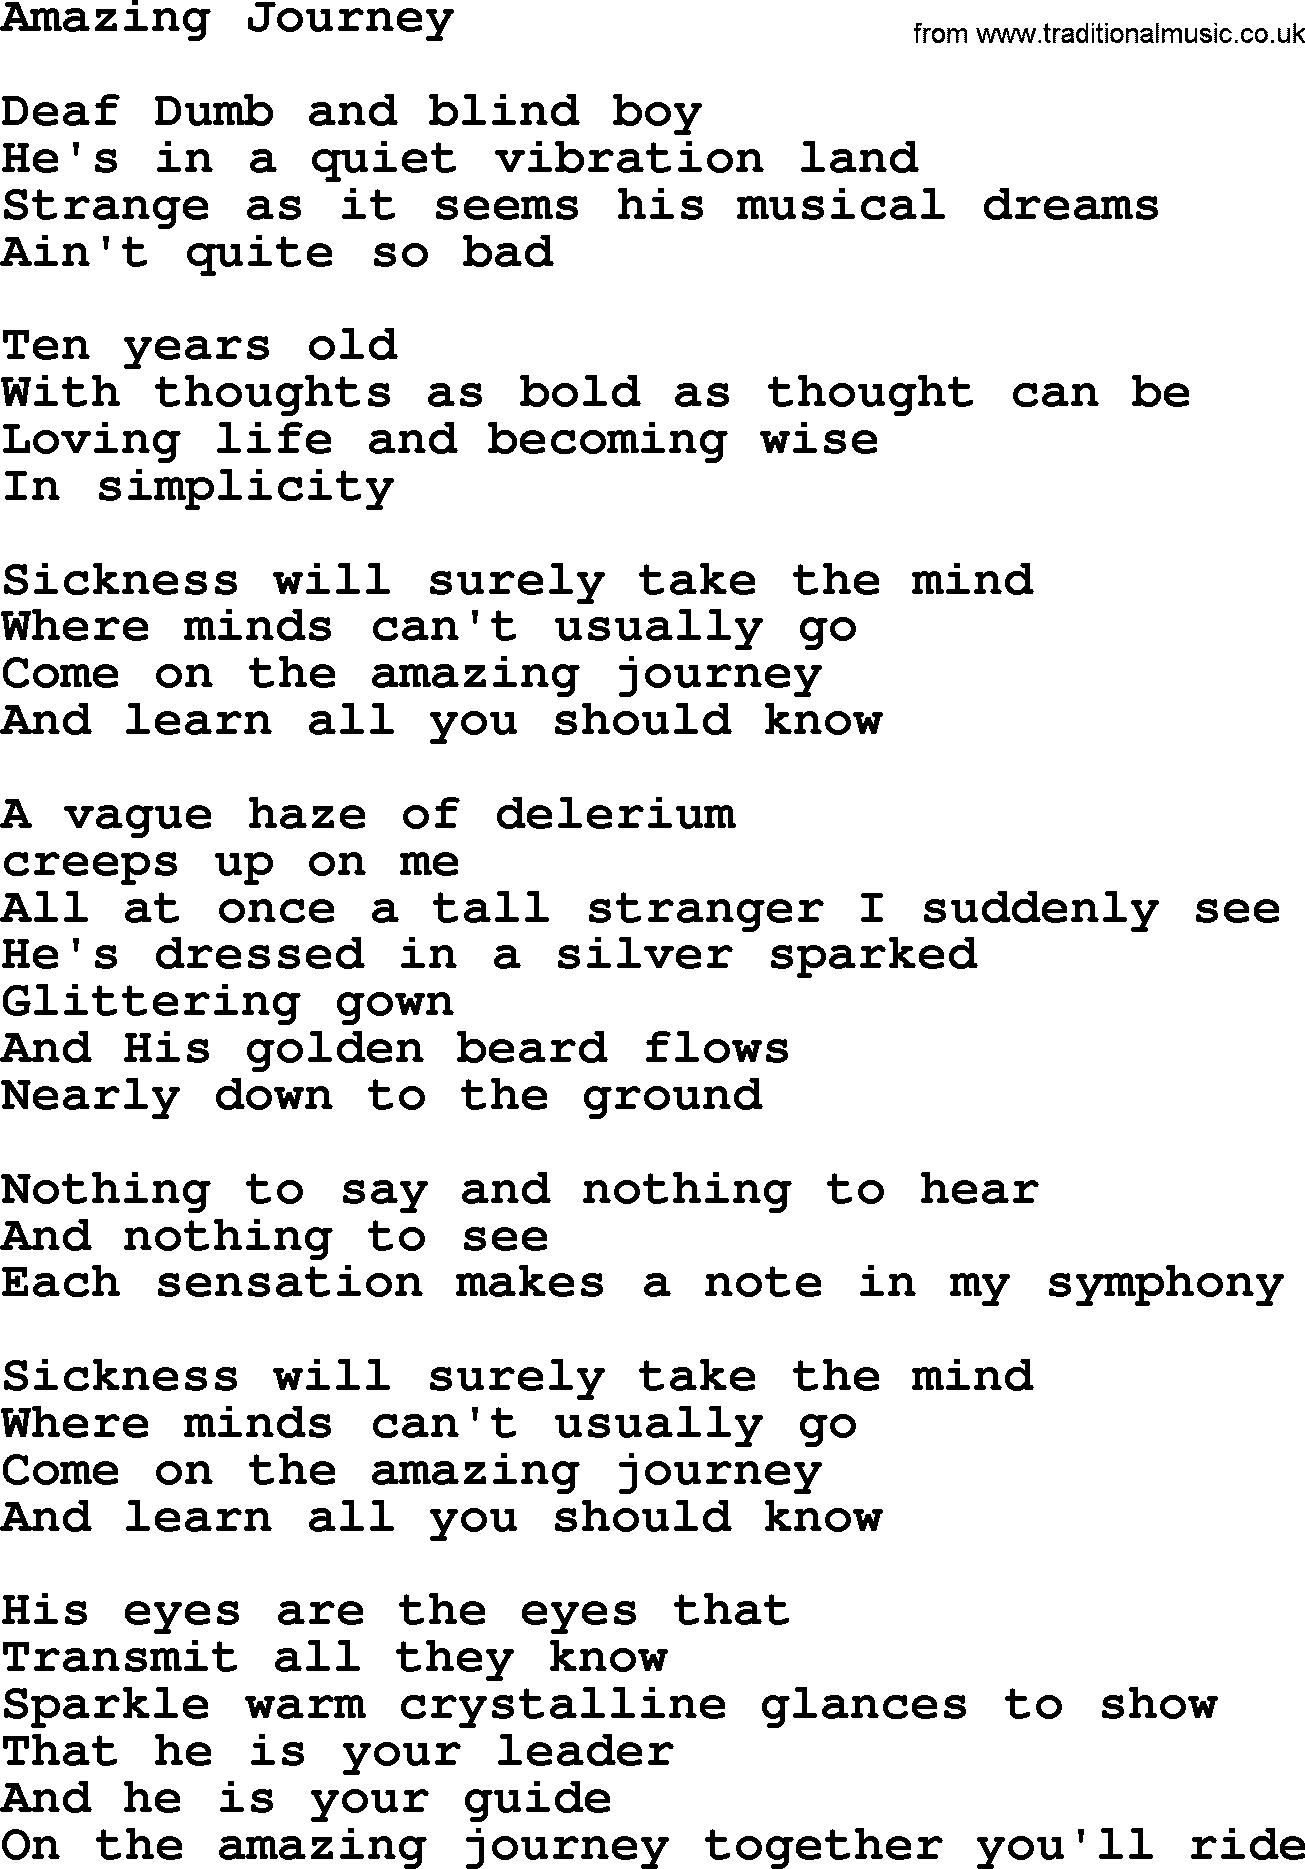 The Byrds song Amazing Journey, lyrics